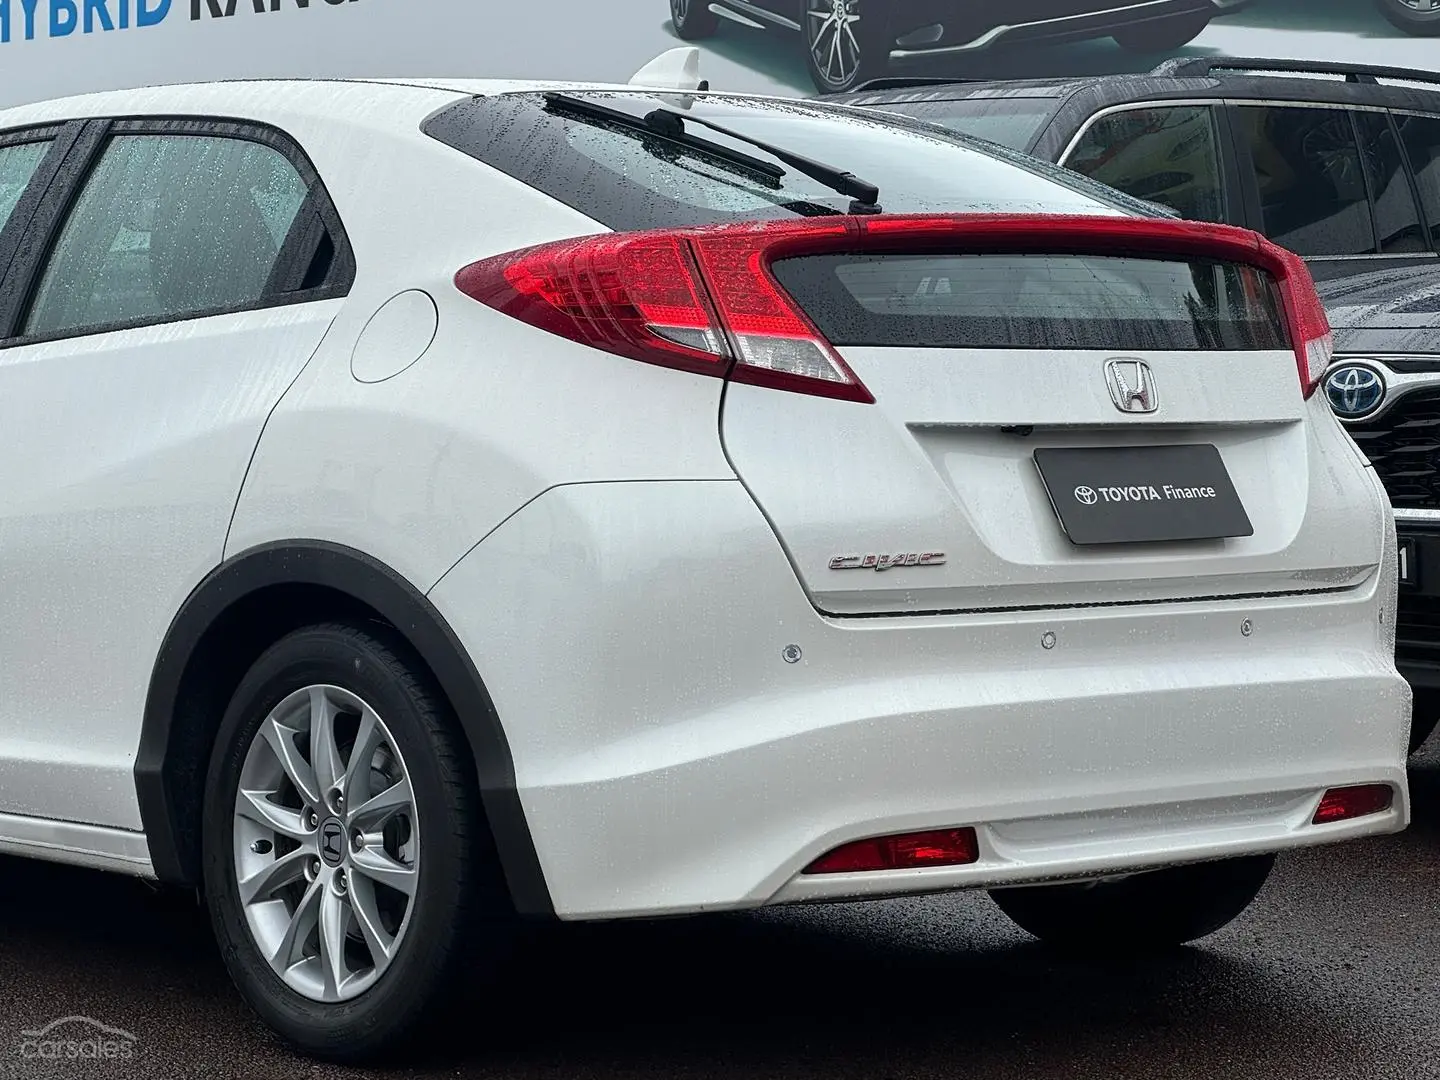 2013 Honda Civic Image 8